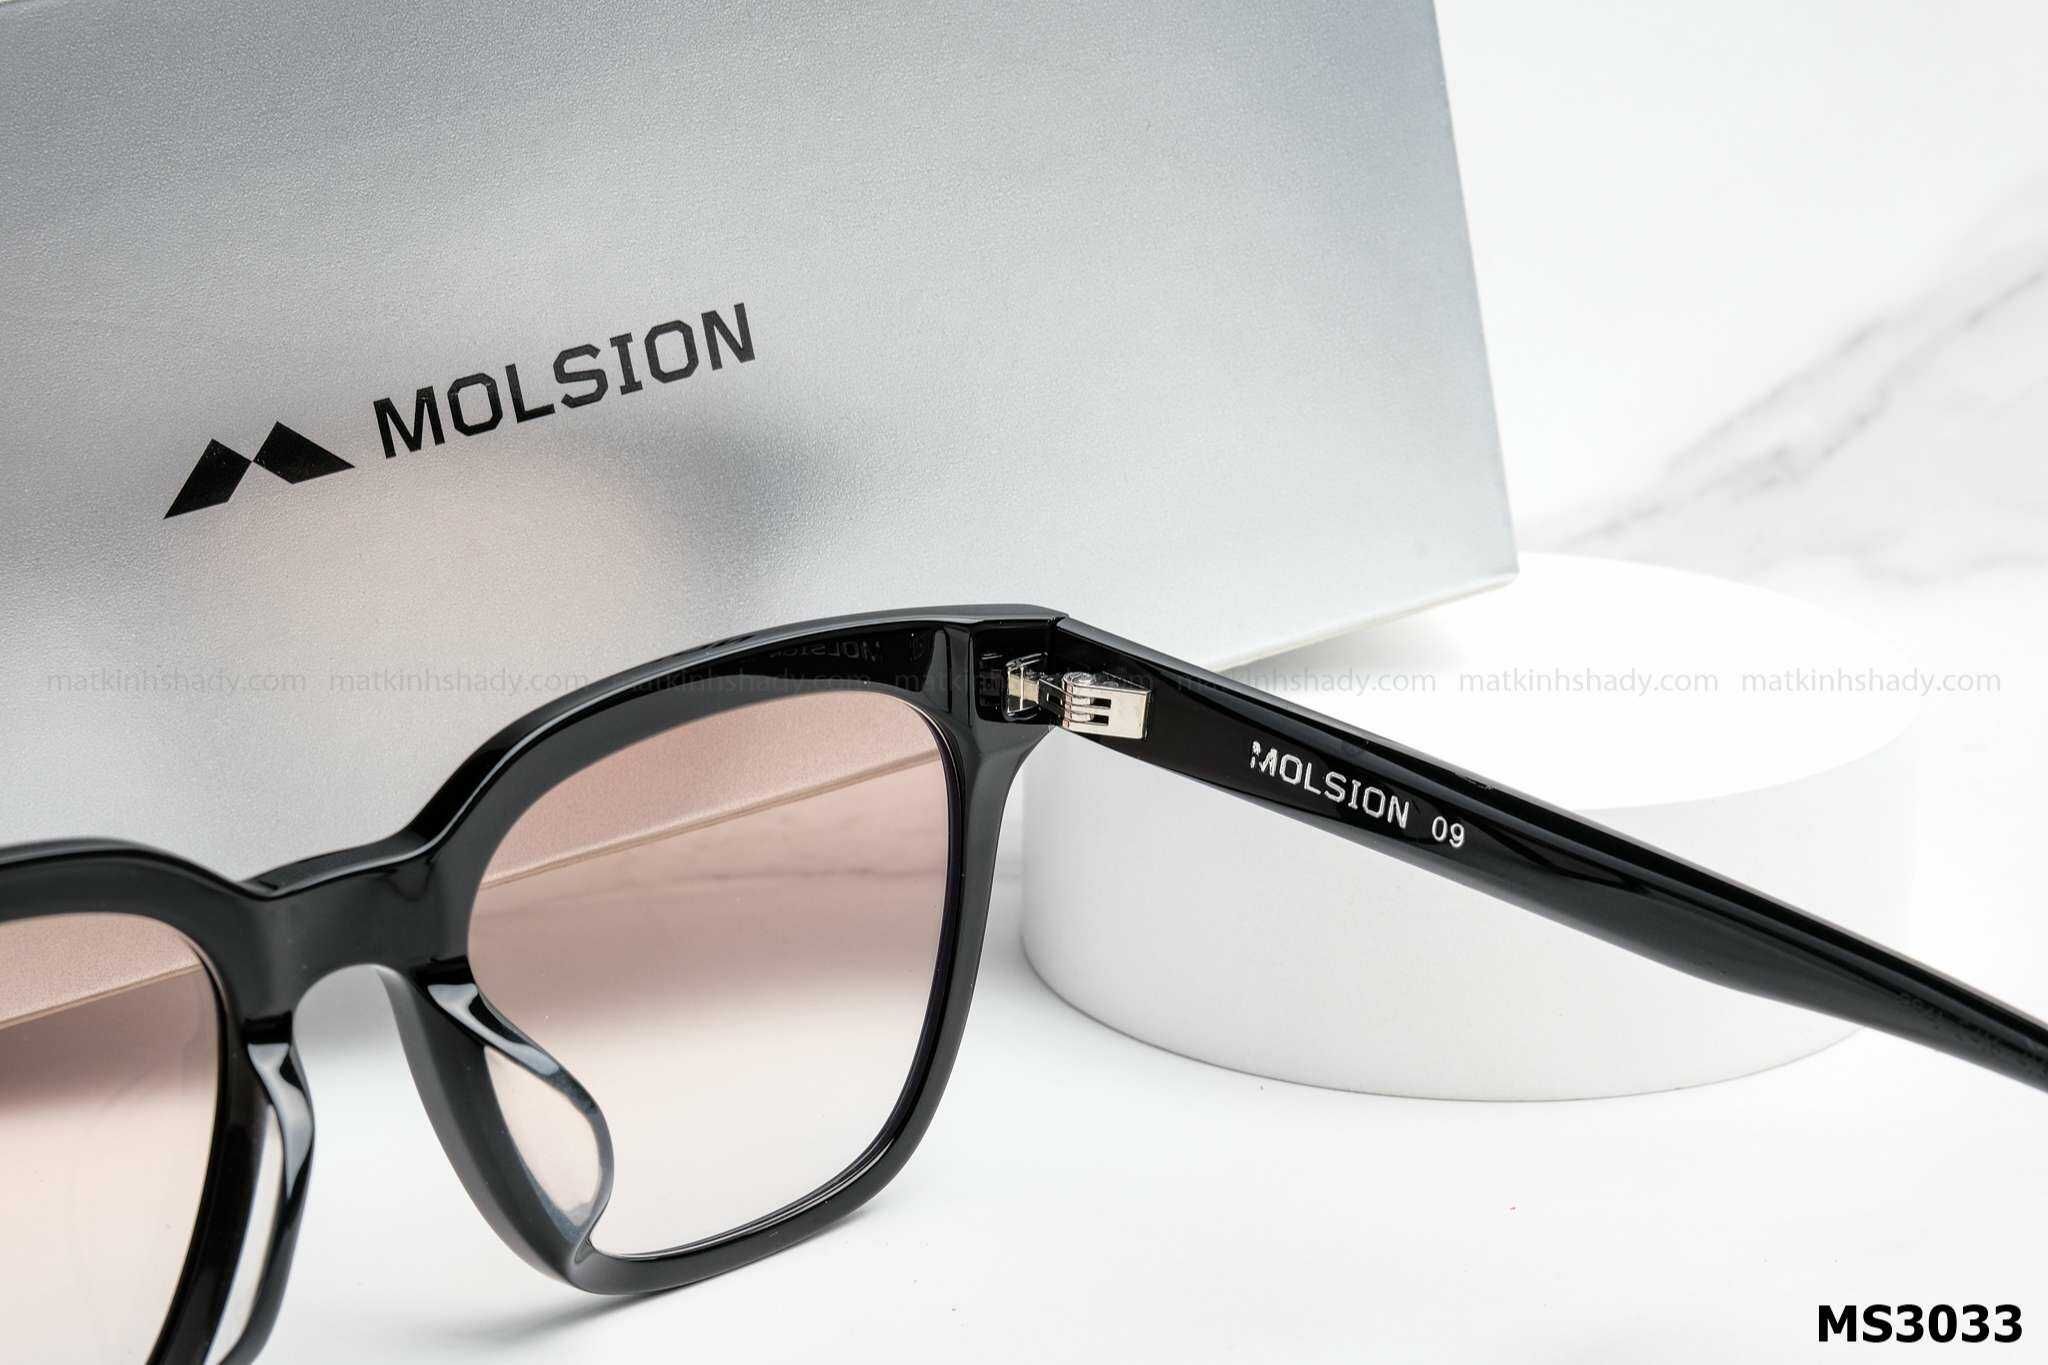  Molsion Eyewear - Sunglasses - MS3033 